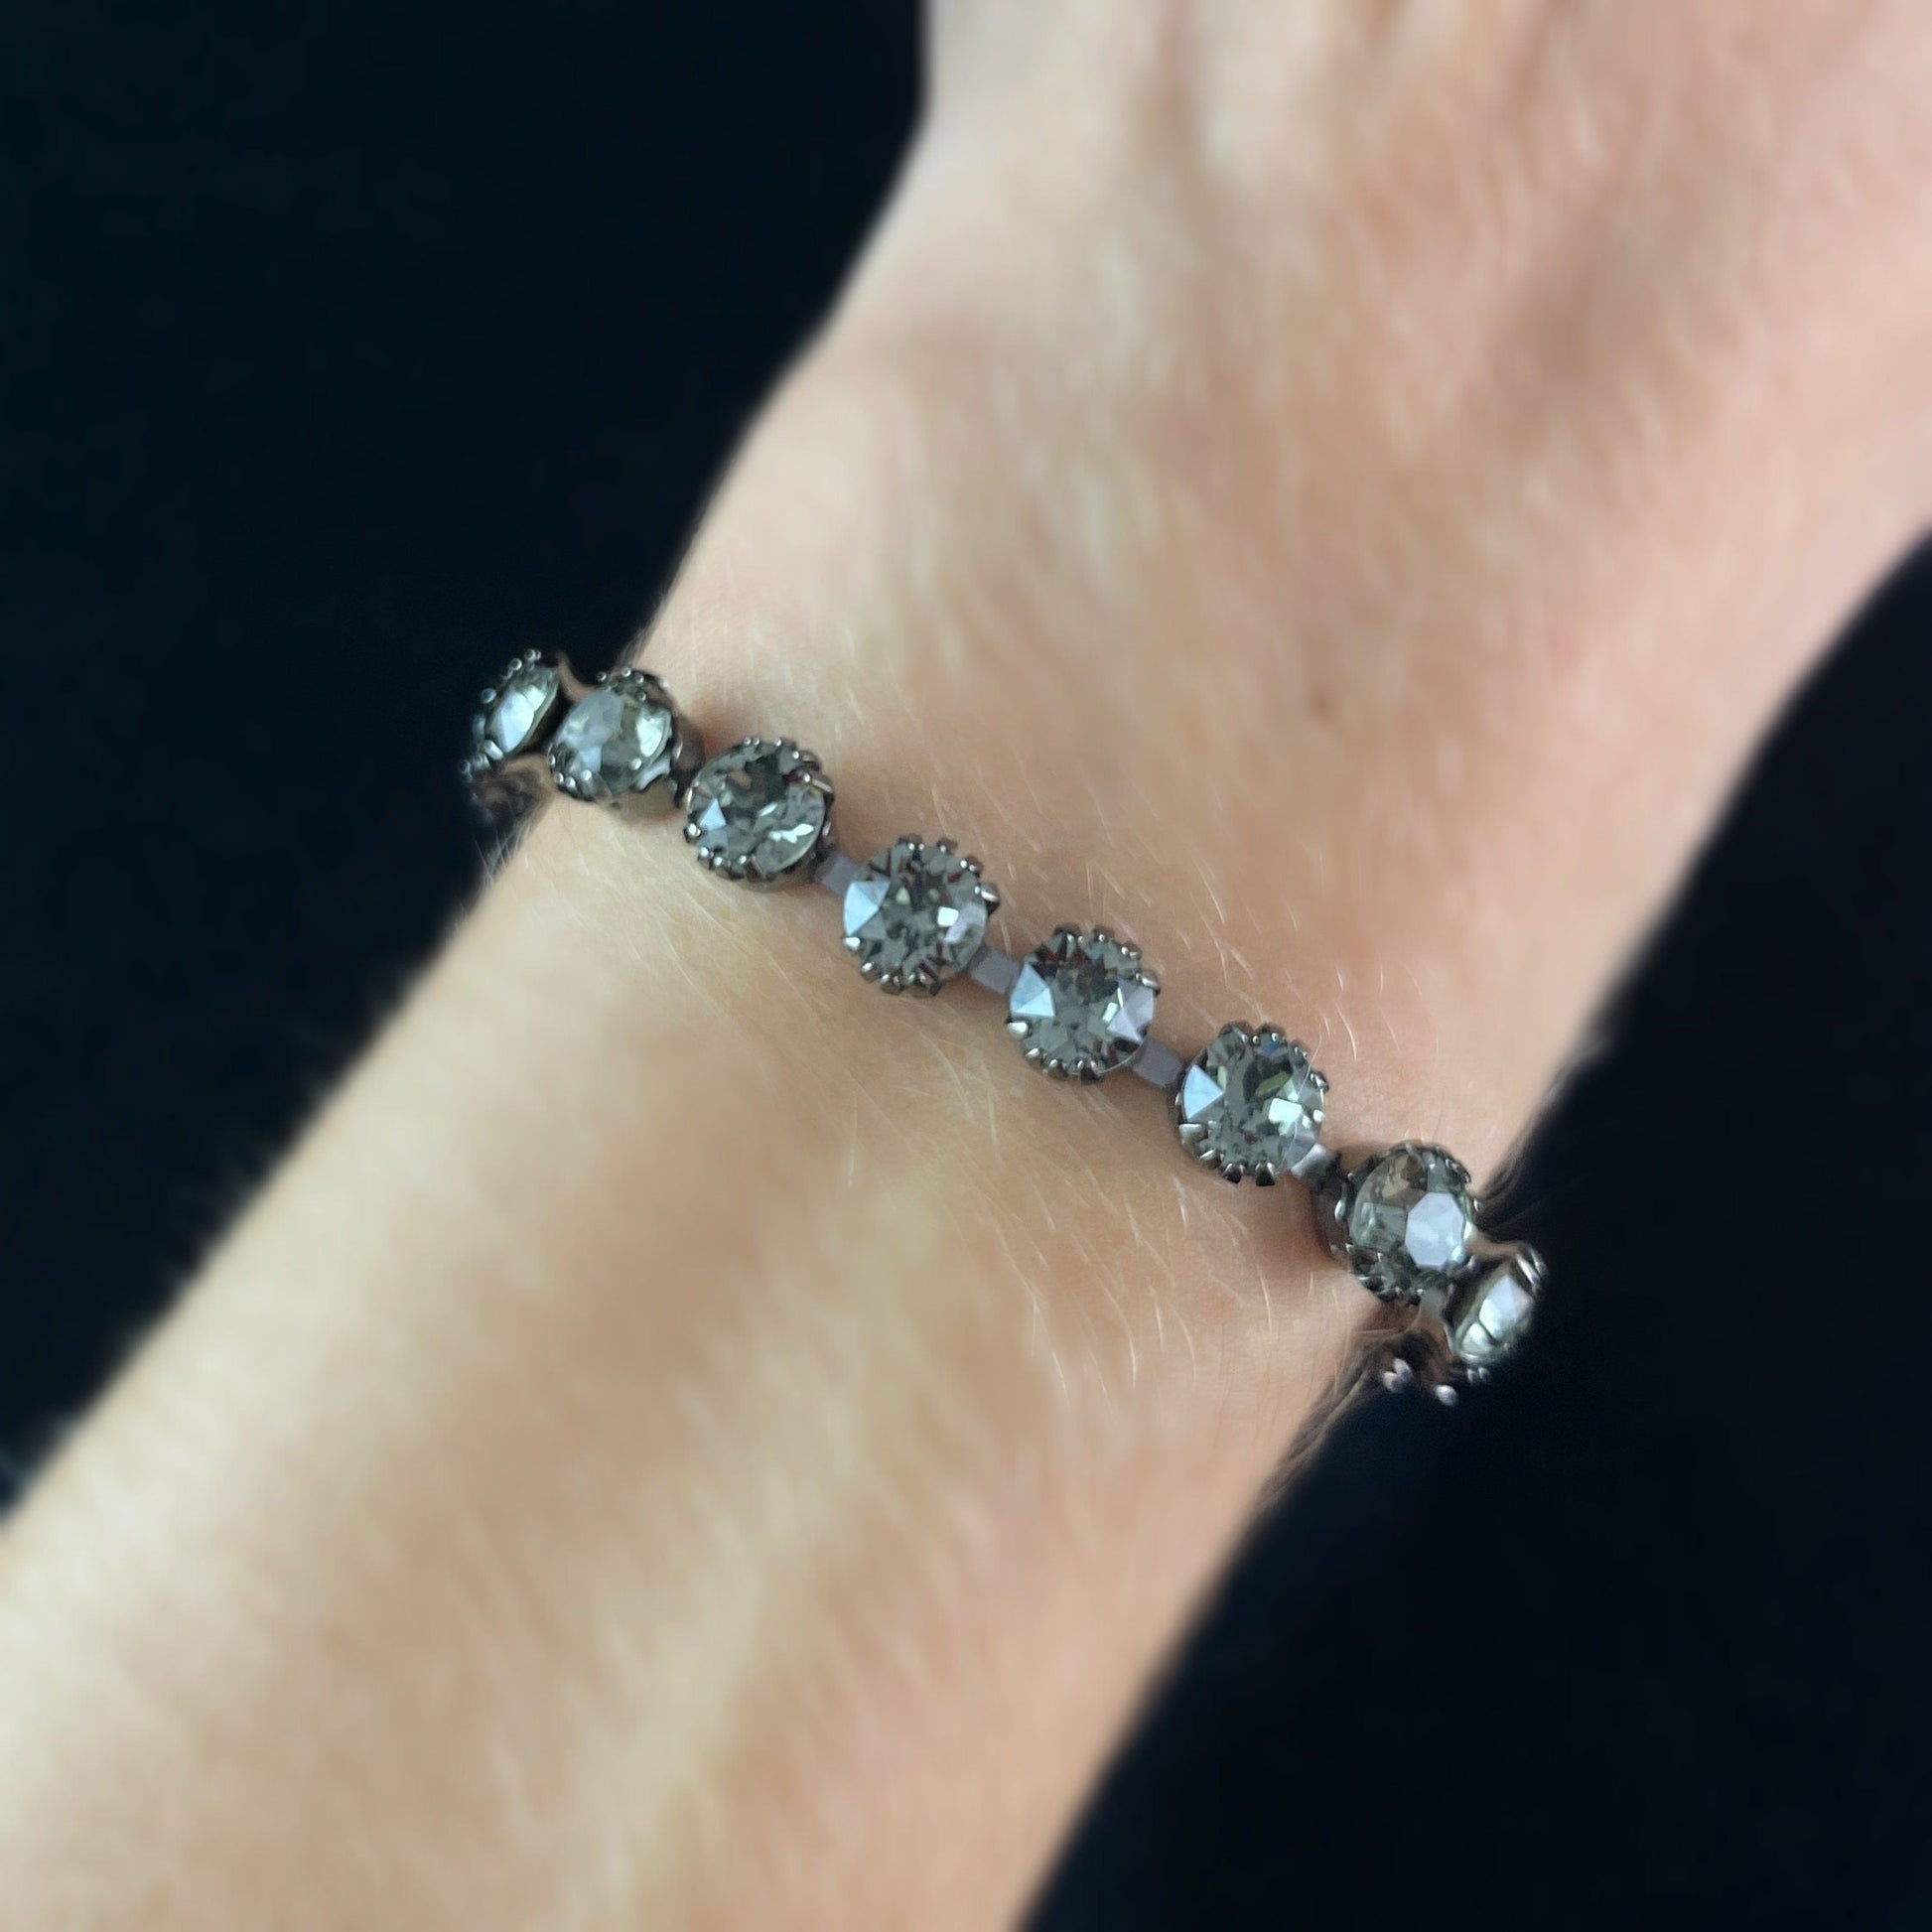 Gray Swarovski Crystal Bracelet - La Vie Parisienne by Catherine Popesco